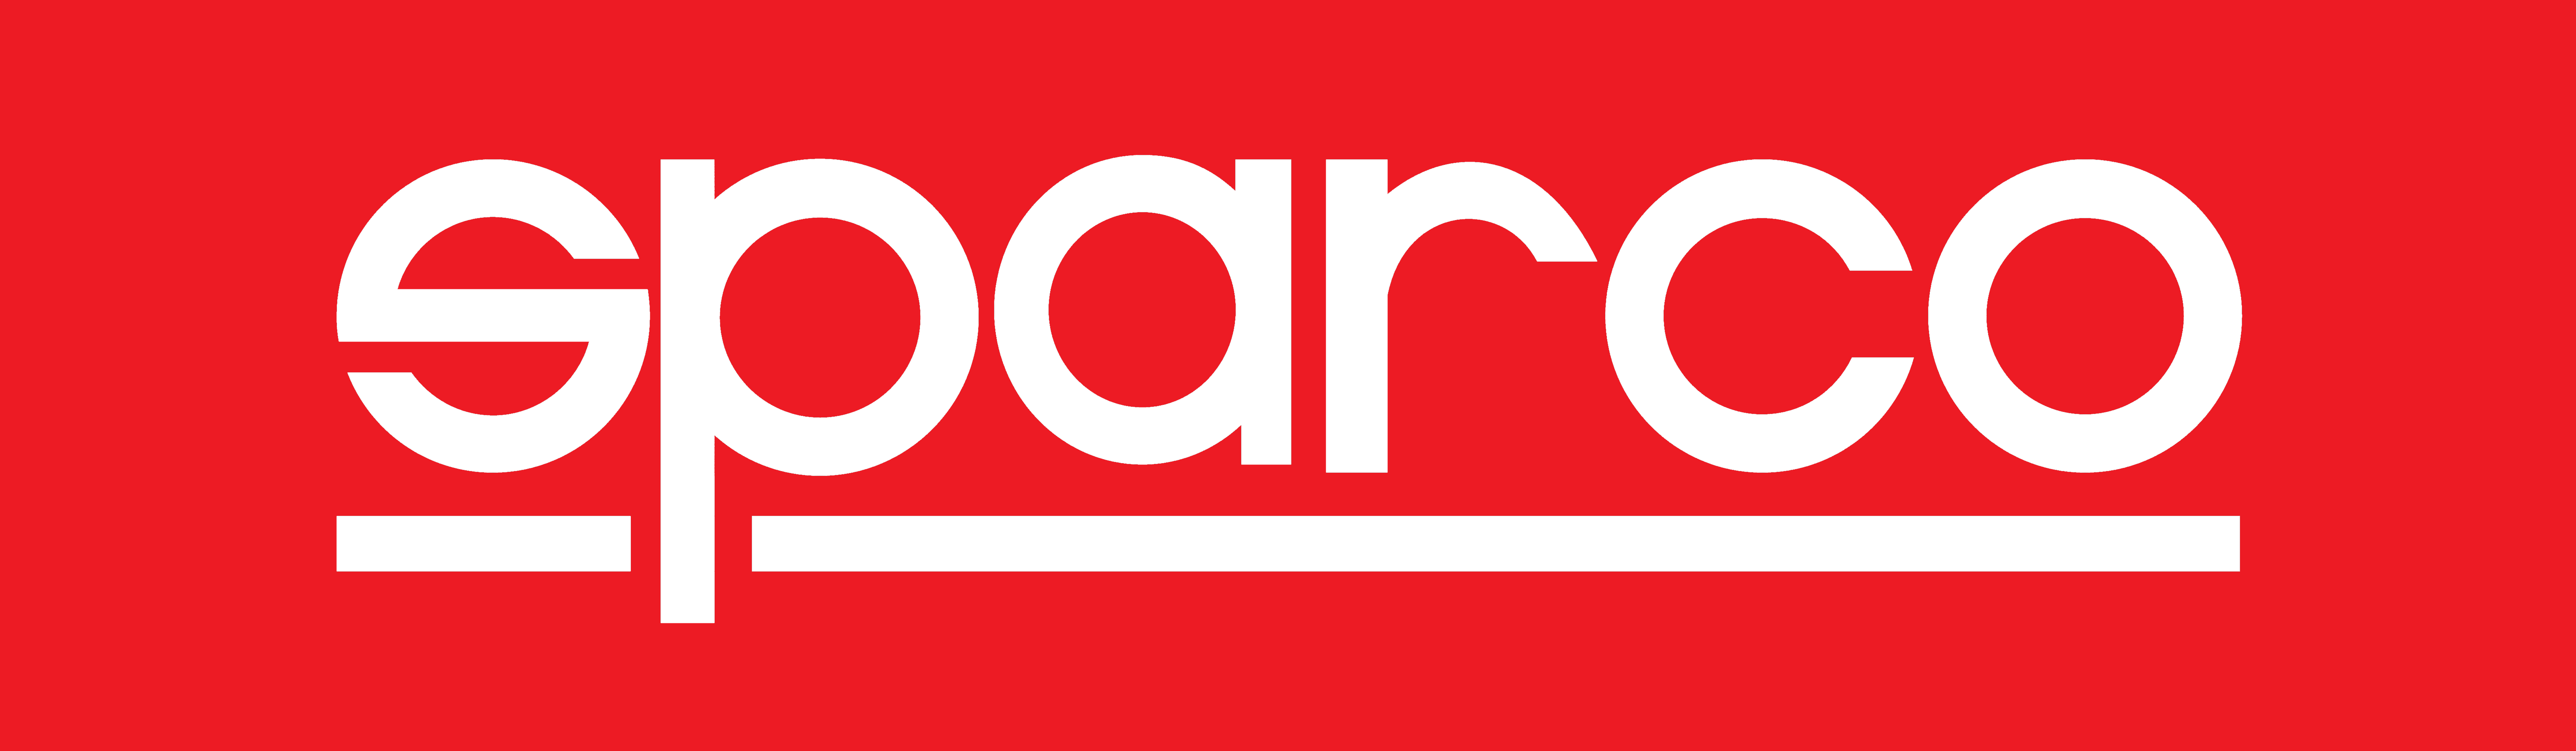 Sparco Logo - Sparco – Logos Download